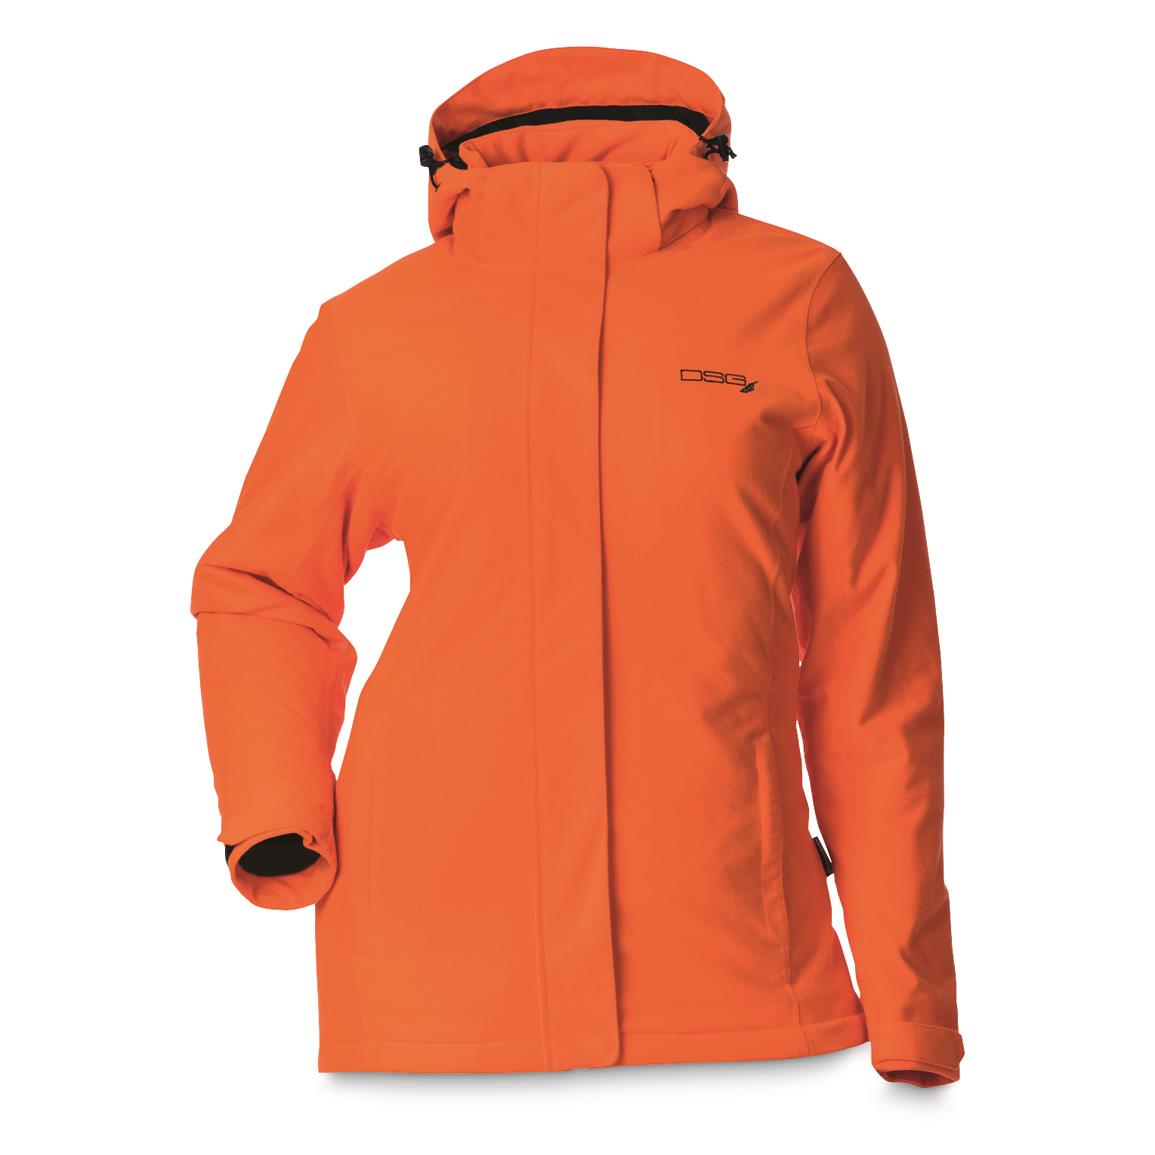 DSG Outerwear Women's Addie Blaze Hunting Jacket, Blaze Orange